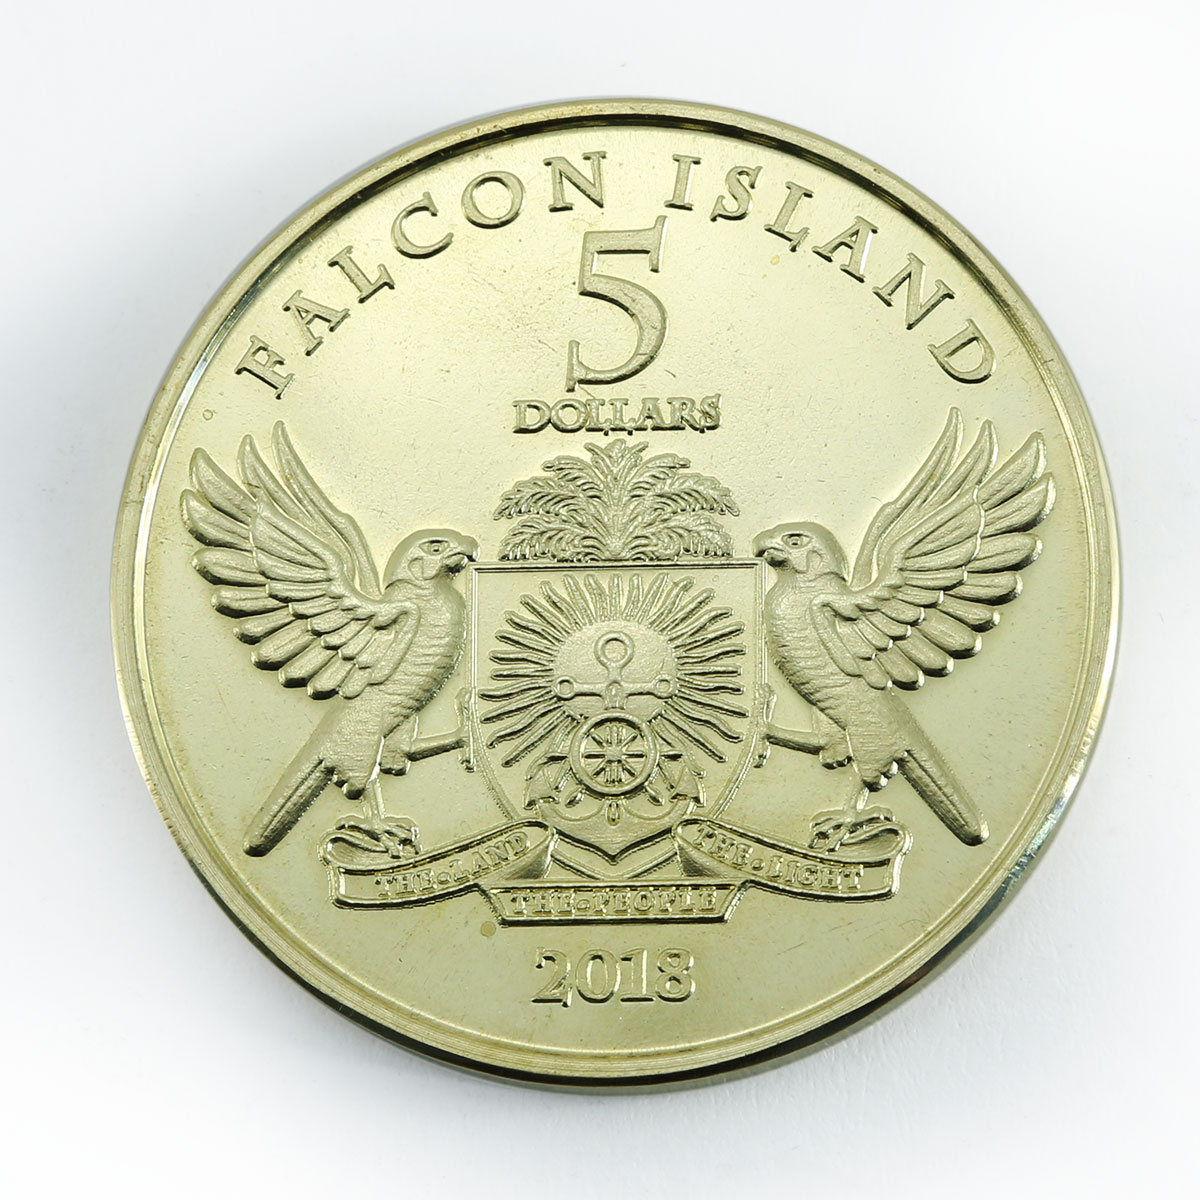 Falcon Island 5 dollars Siberian birds Osprey coin 2018